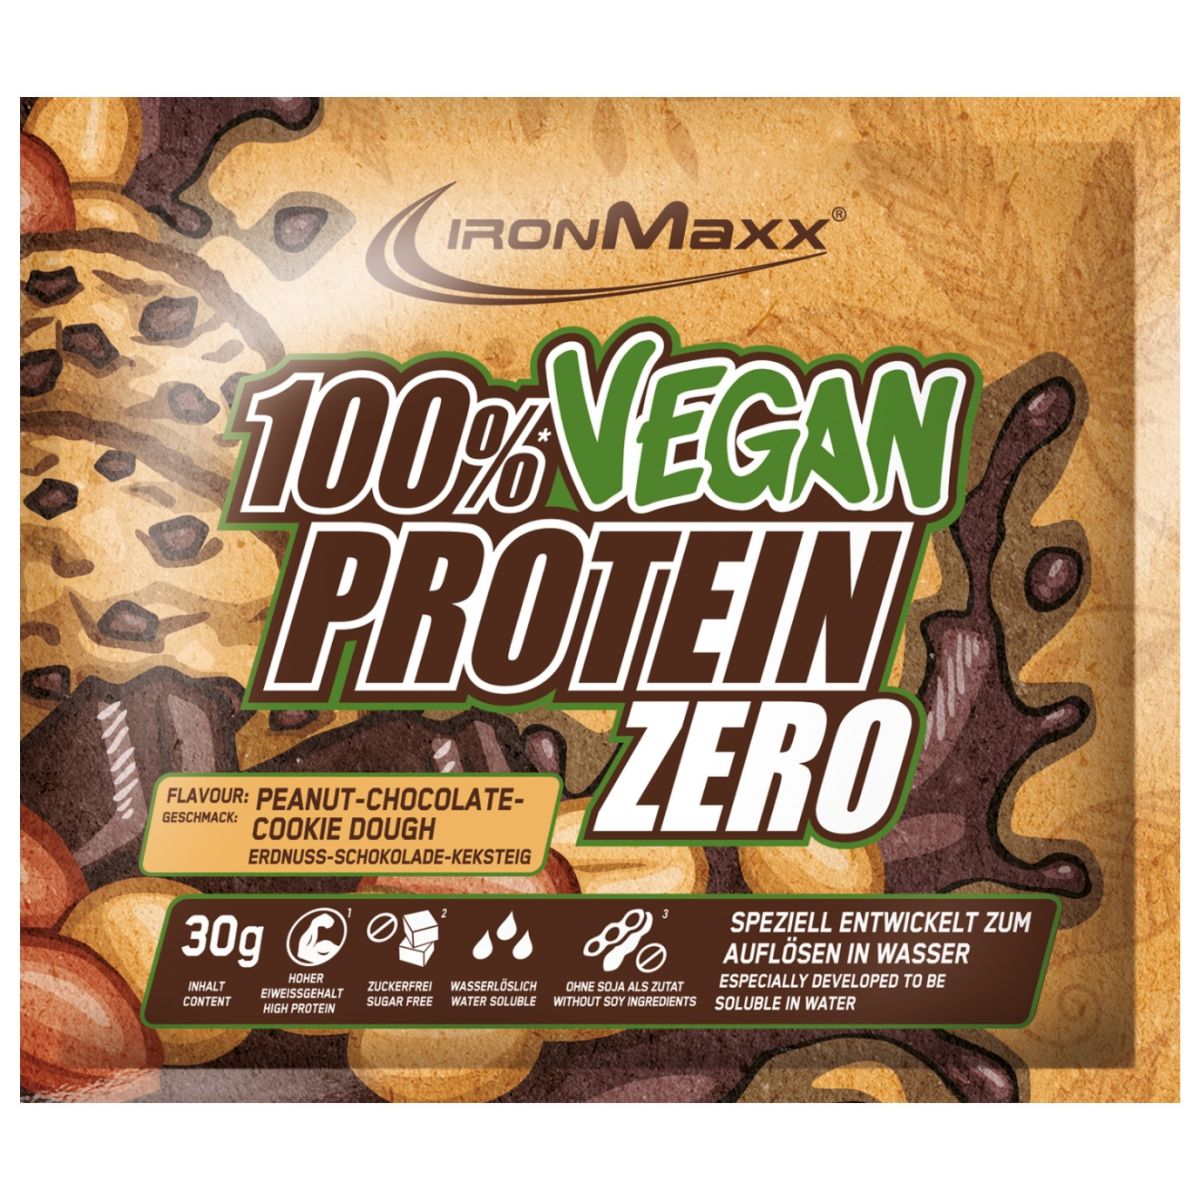 100% Vegan Protein Zero - 30g Probe - Peanut Chocolate Cookie Dough